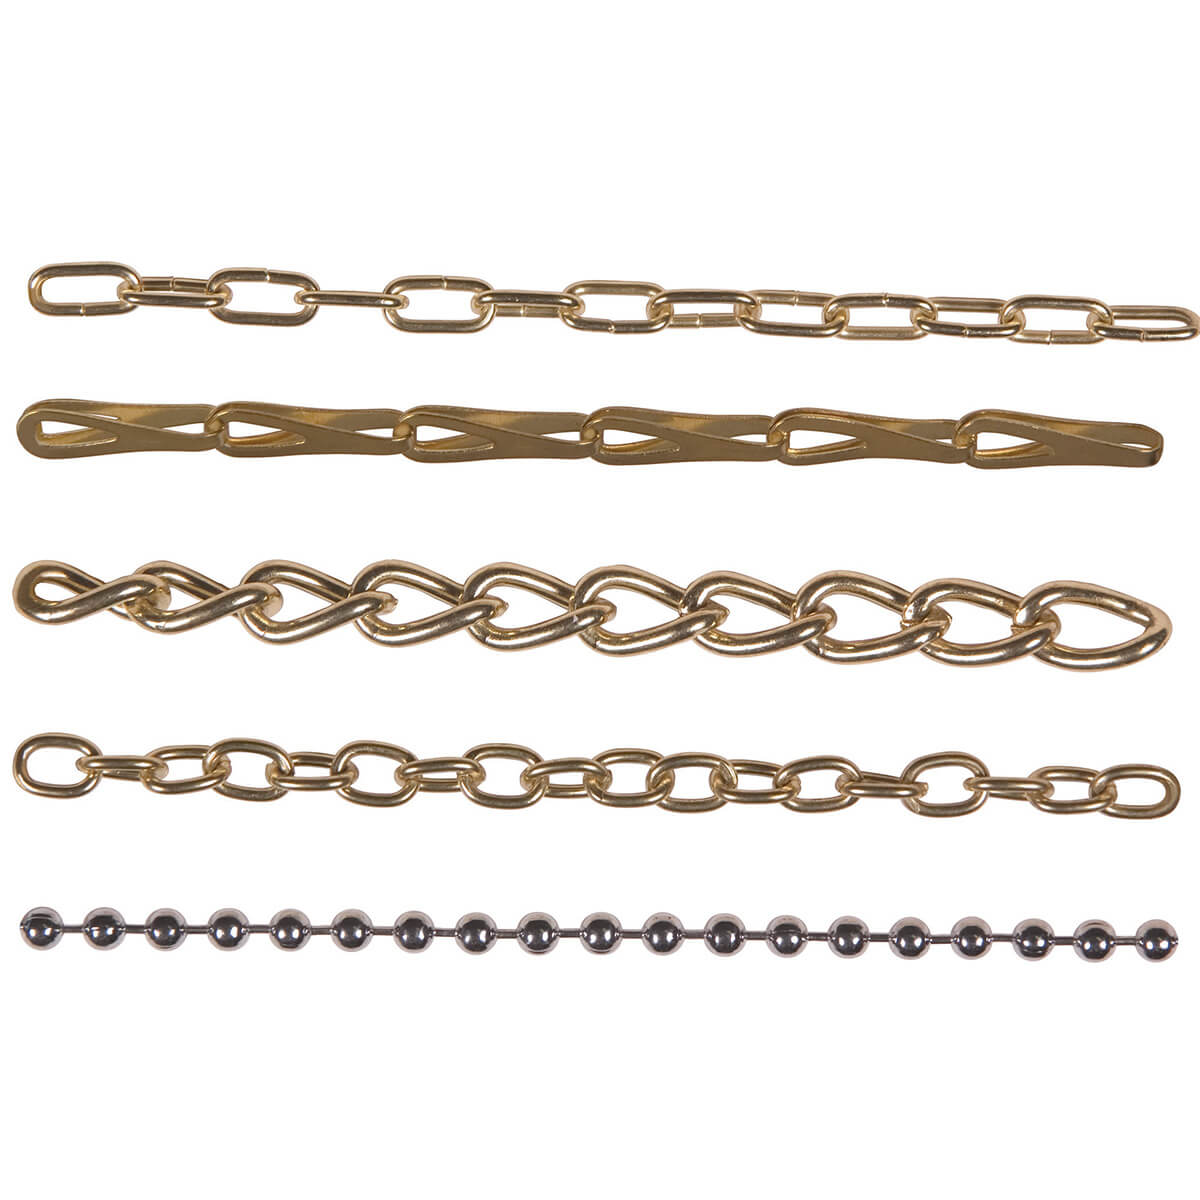 Hobby / Craft Chain - Steel